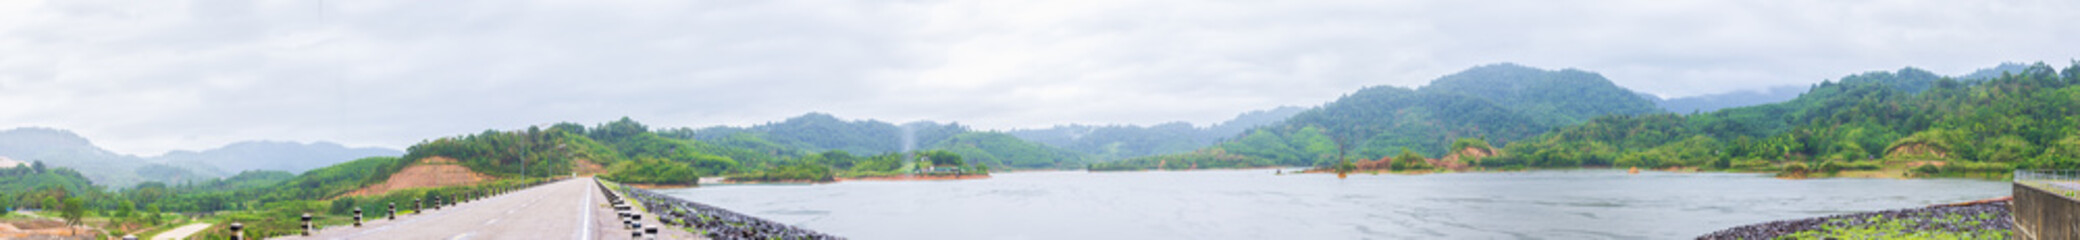 Panorama of dam and mountain